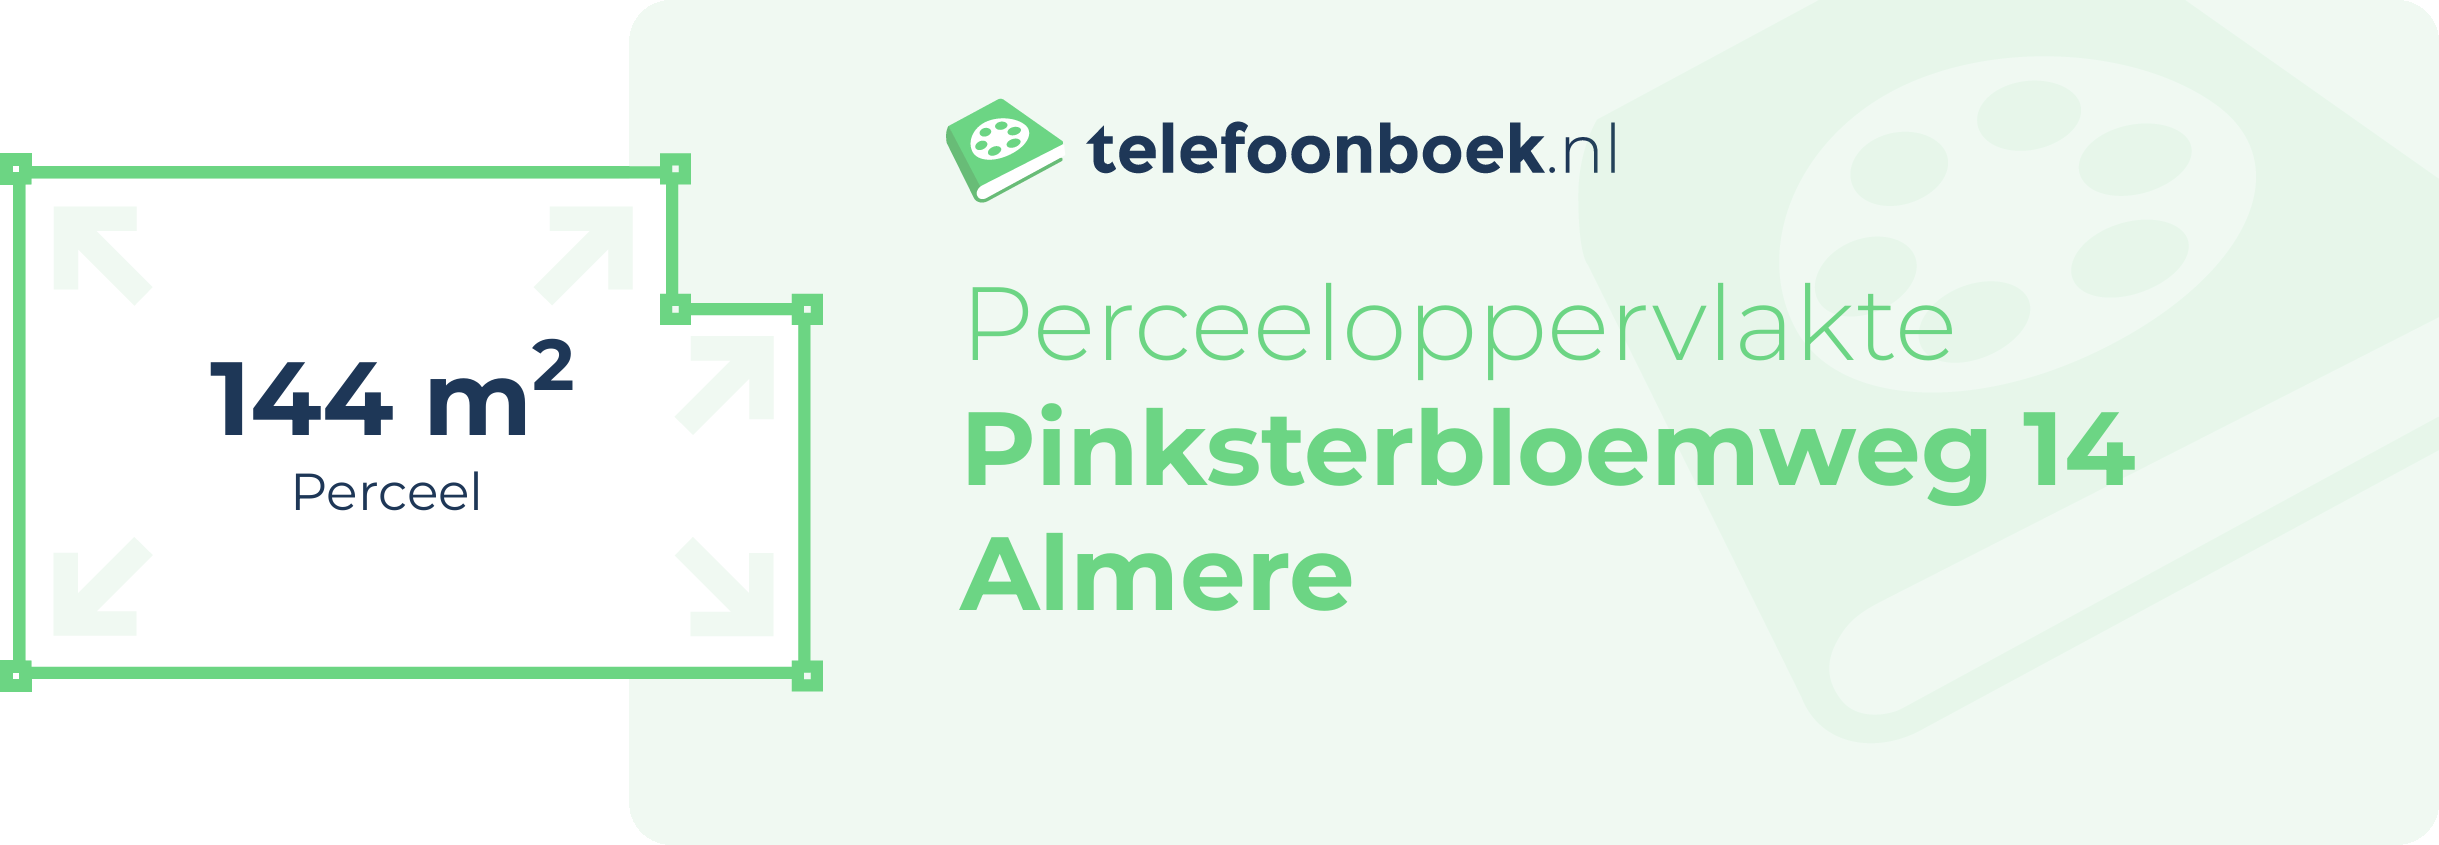 Perceeloppervlakte Pinksterbloemweg 14 Almere